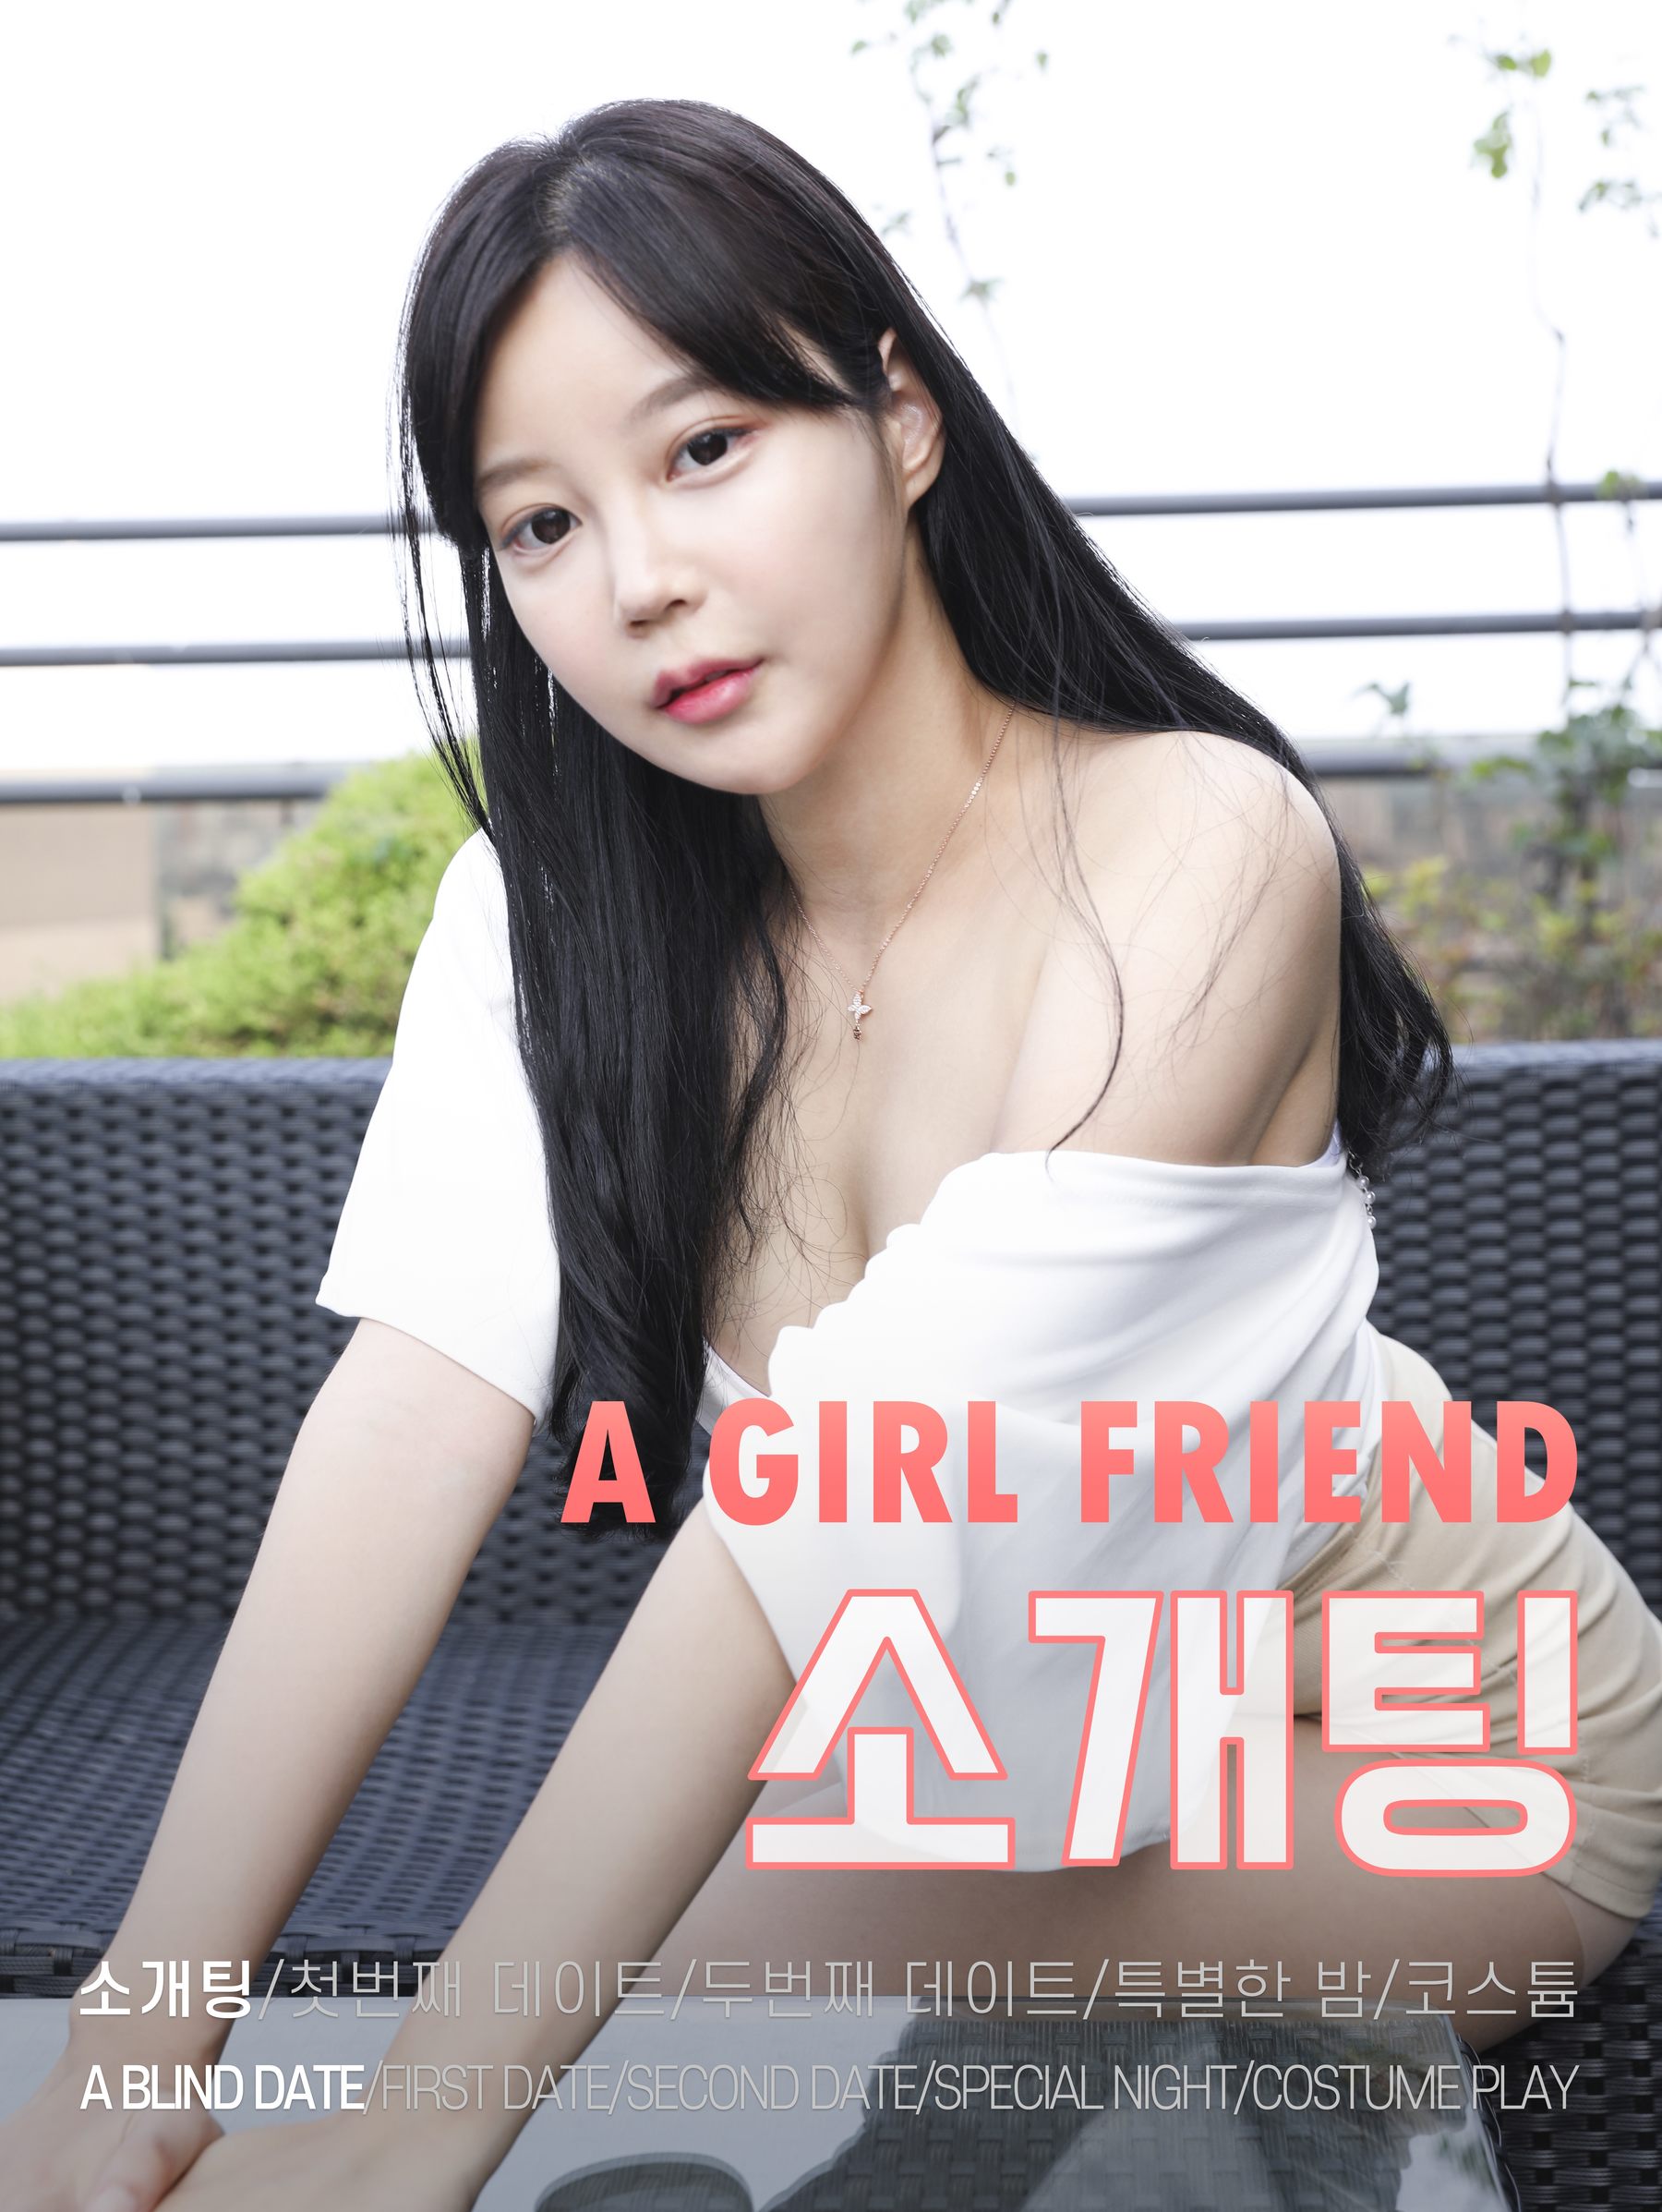 [BUNNY] Joo Yeon - A girl friend S.1 A blind date